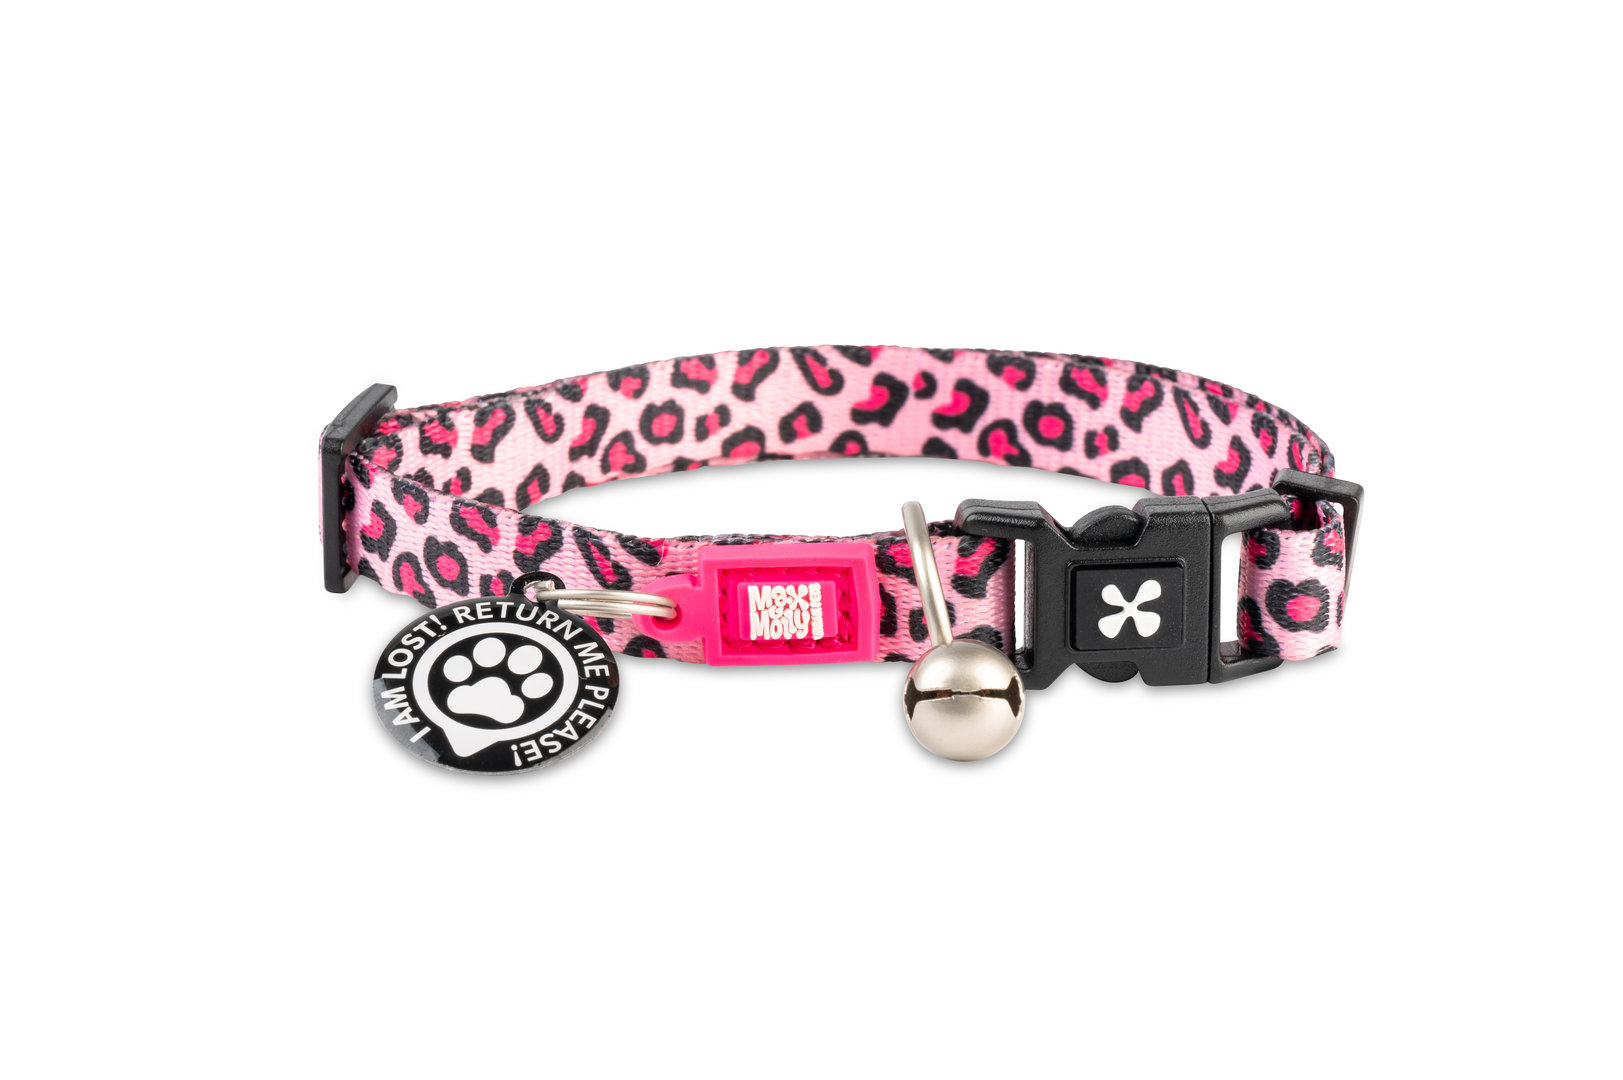 Smart ID Katzen Halsband - Leopard Pink